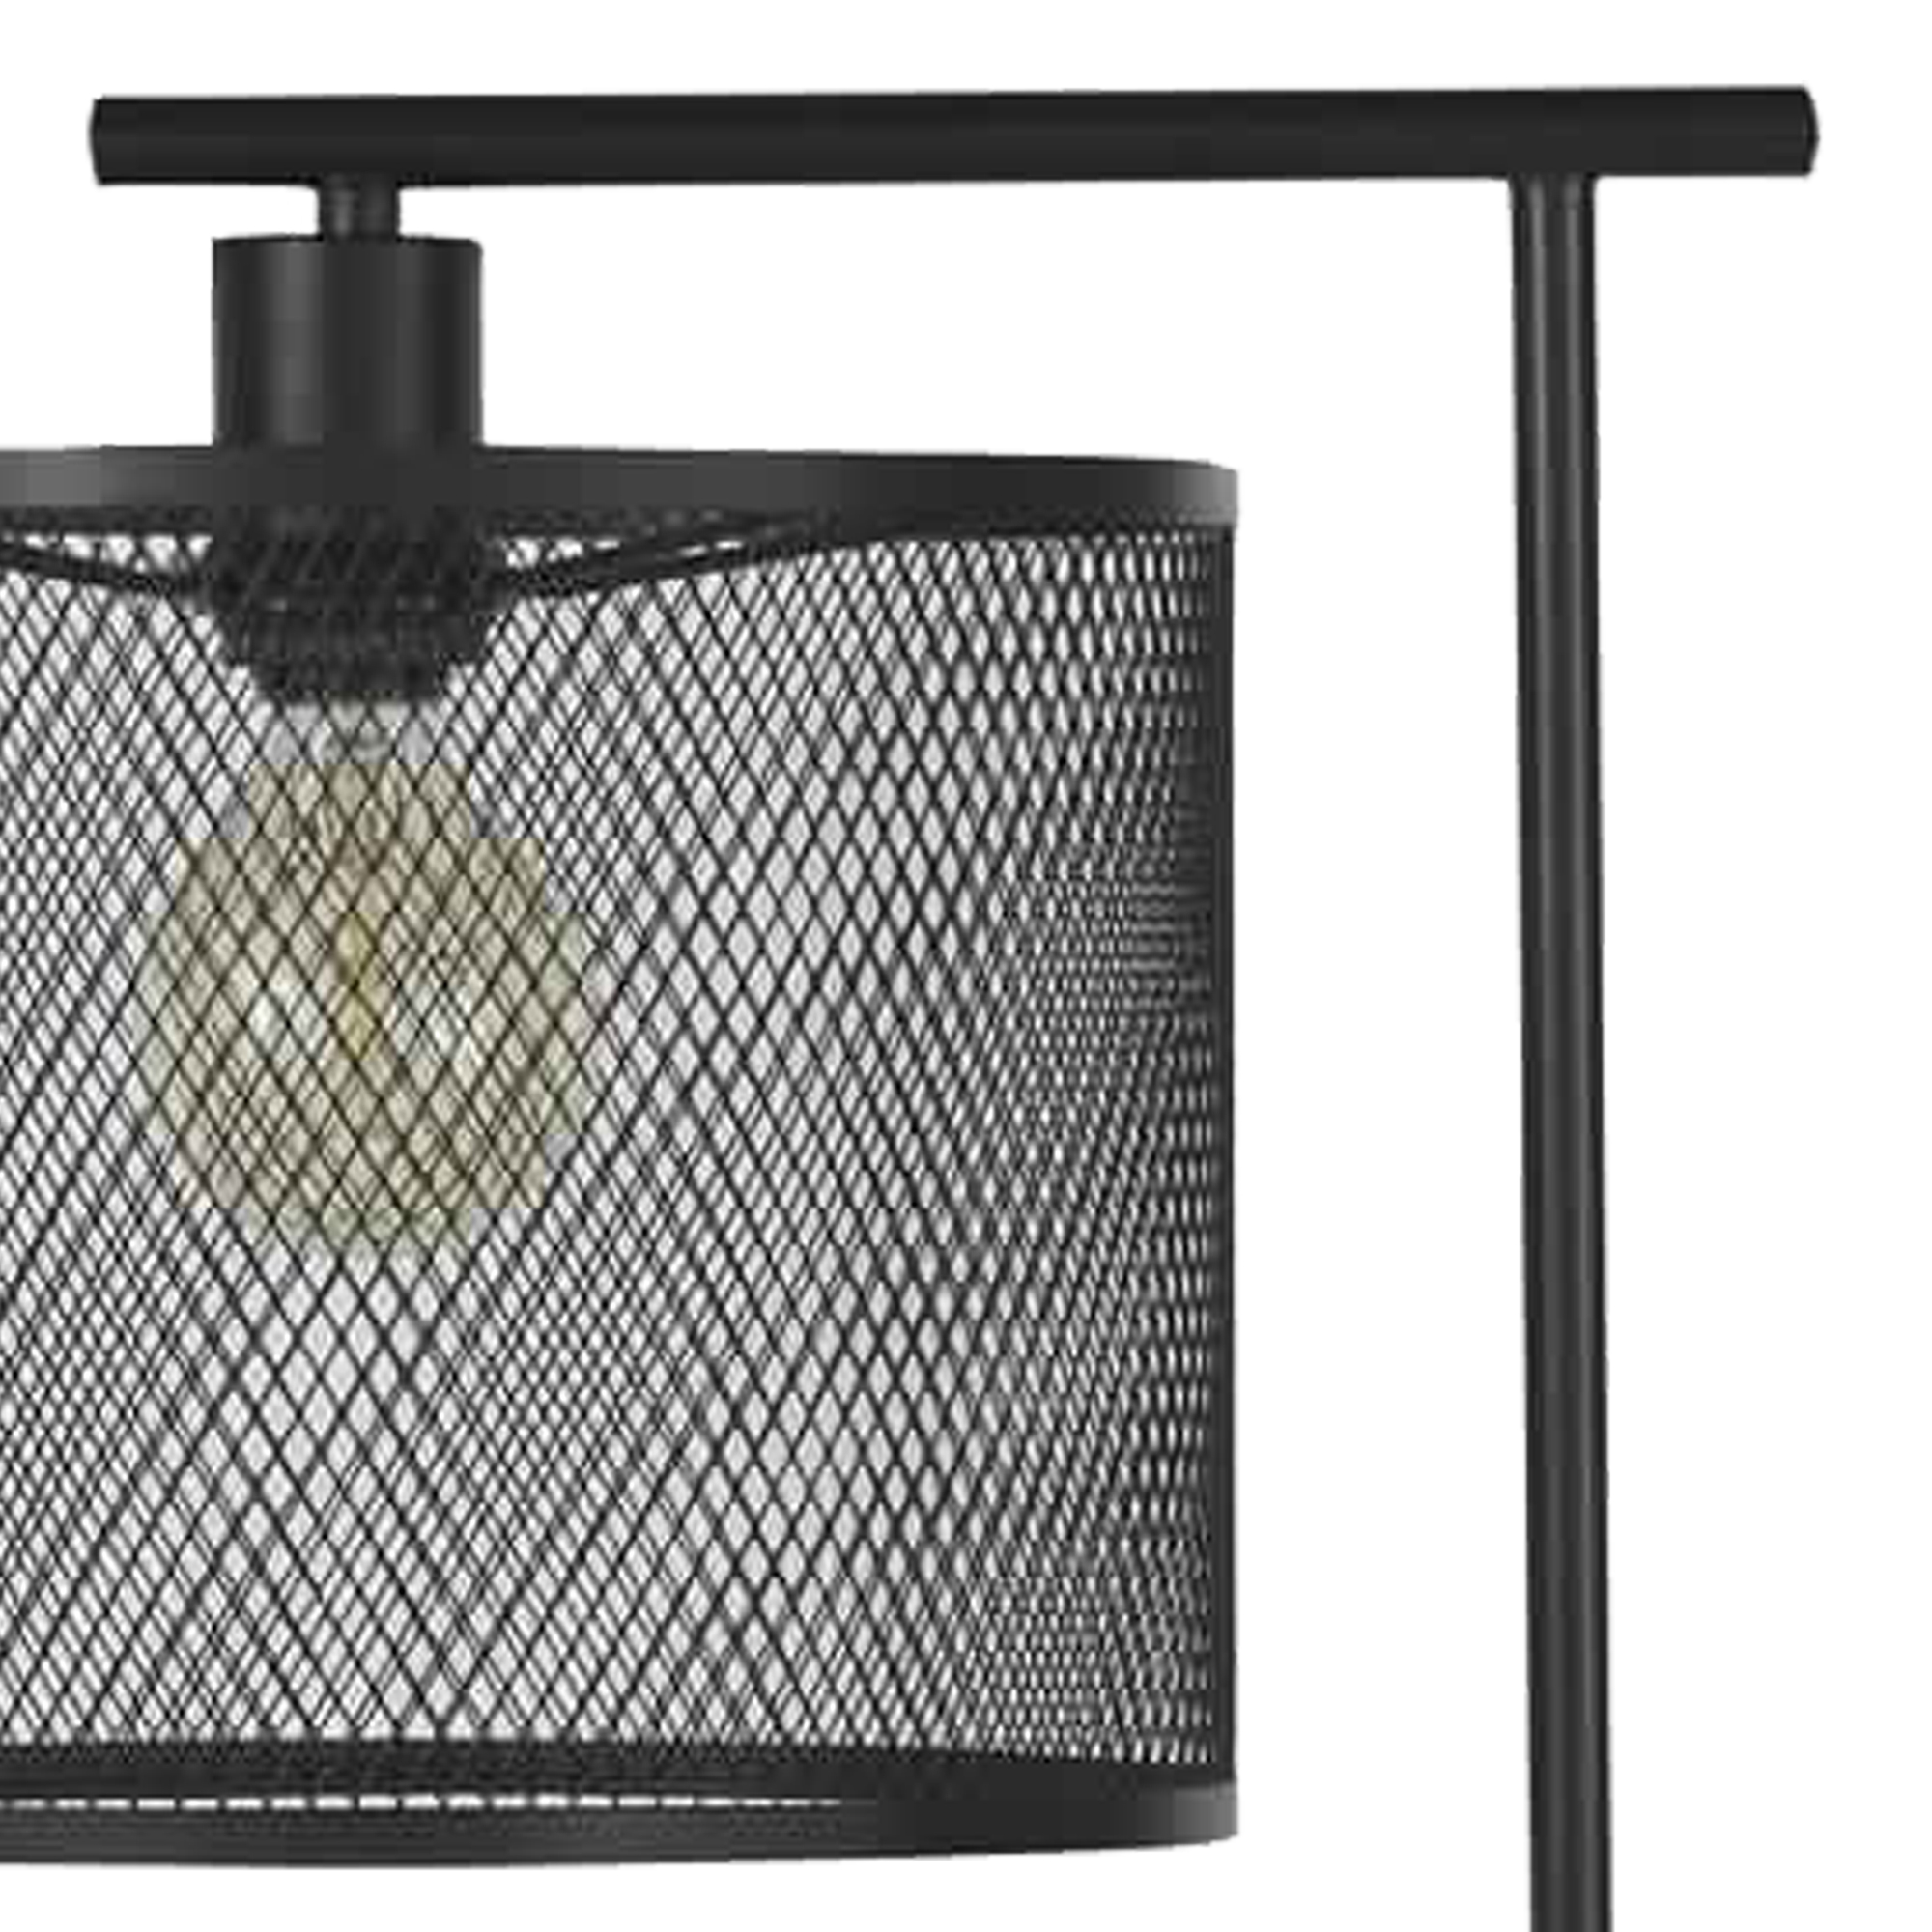 Metal Frame Floor Lamp With Caged Shade, Dark Bronze- Saltoro Sherpi